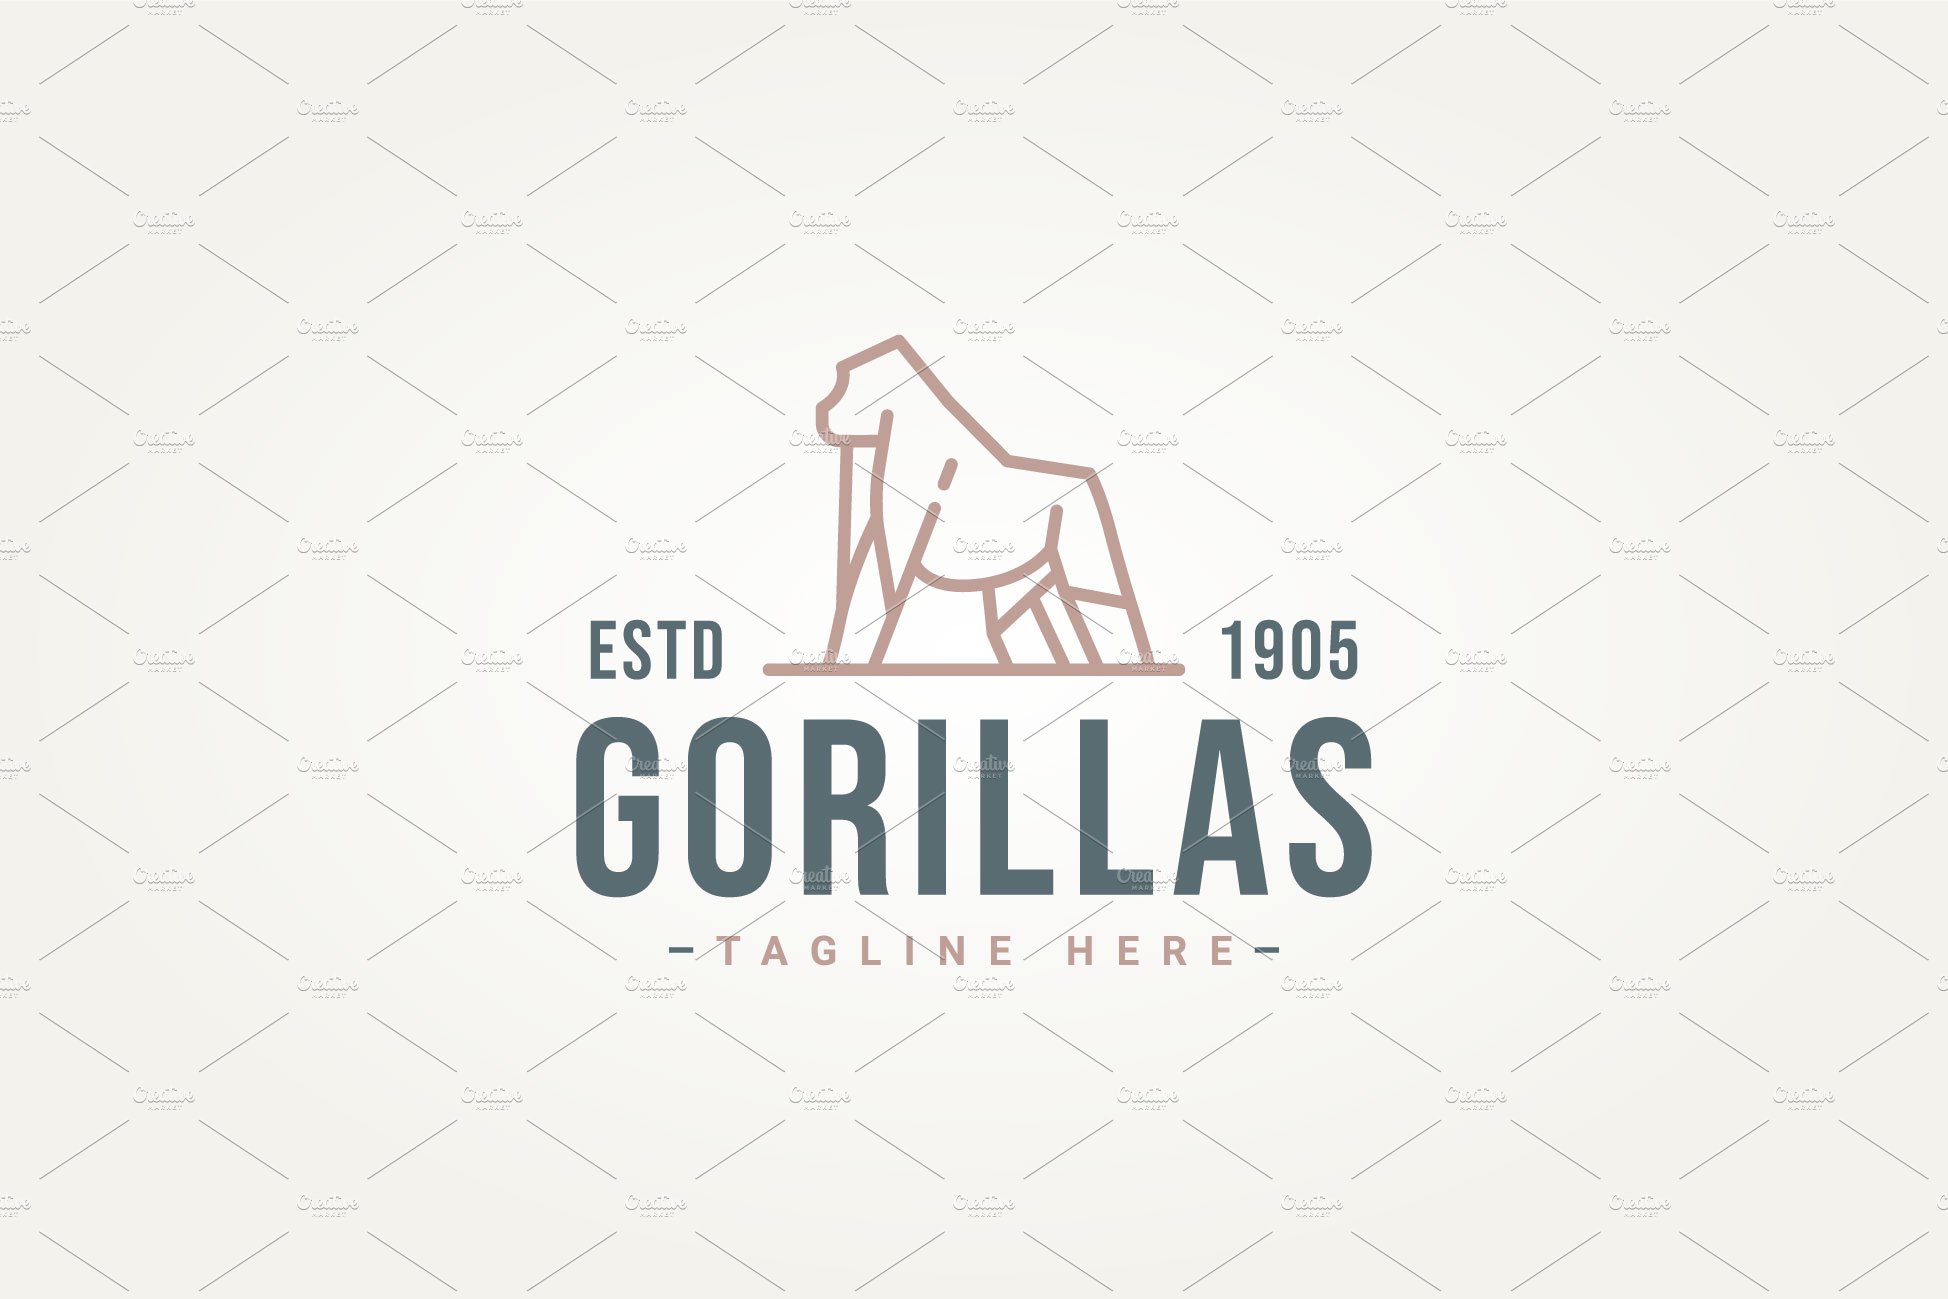 big strong gorilla line art logo cover image.